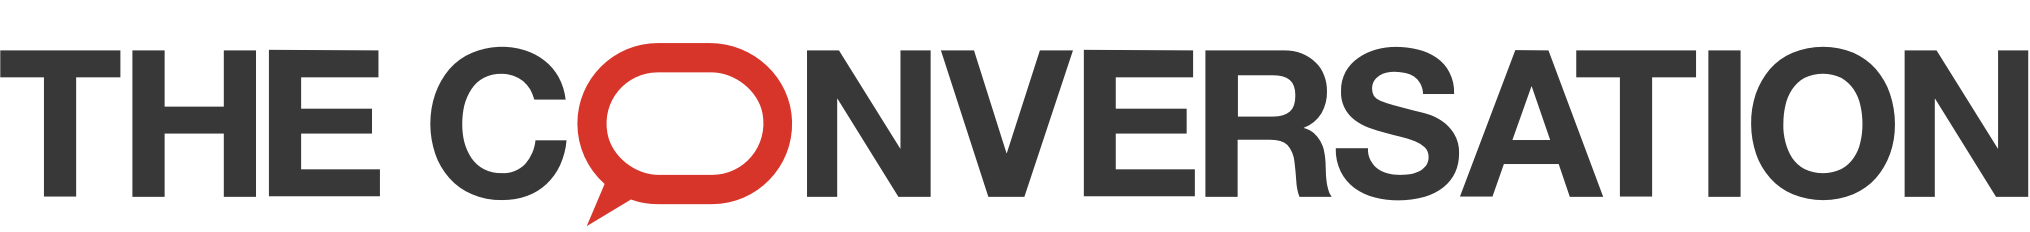 The Conversation logo - links to website